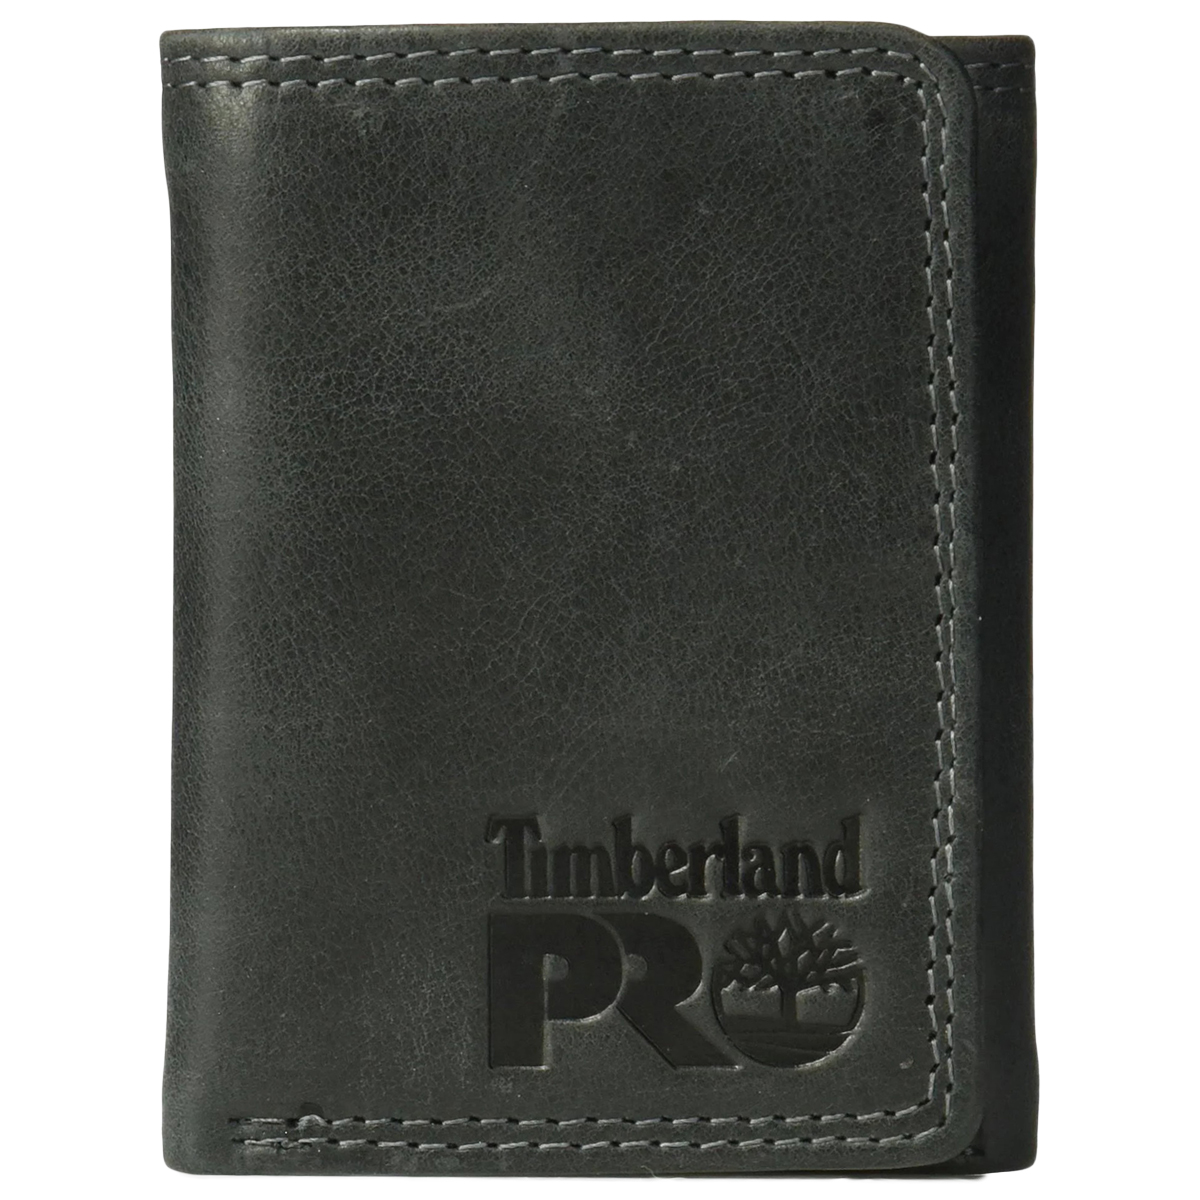 Timberland Pro Men's Trifold Wallet, Black